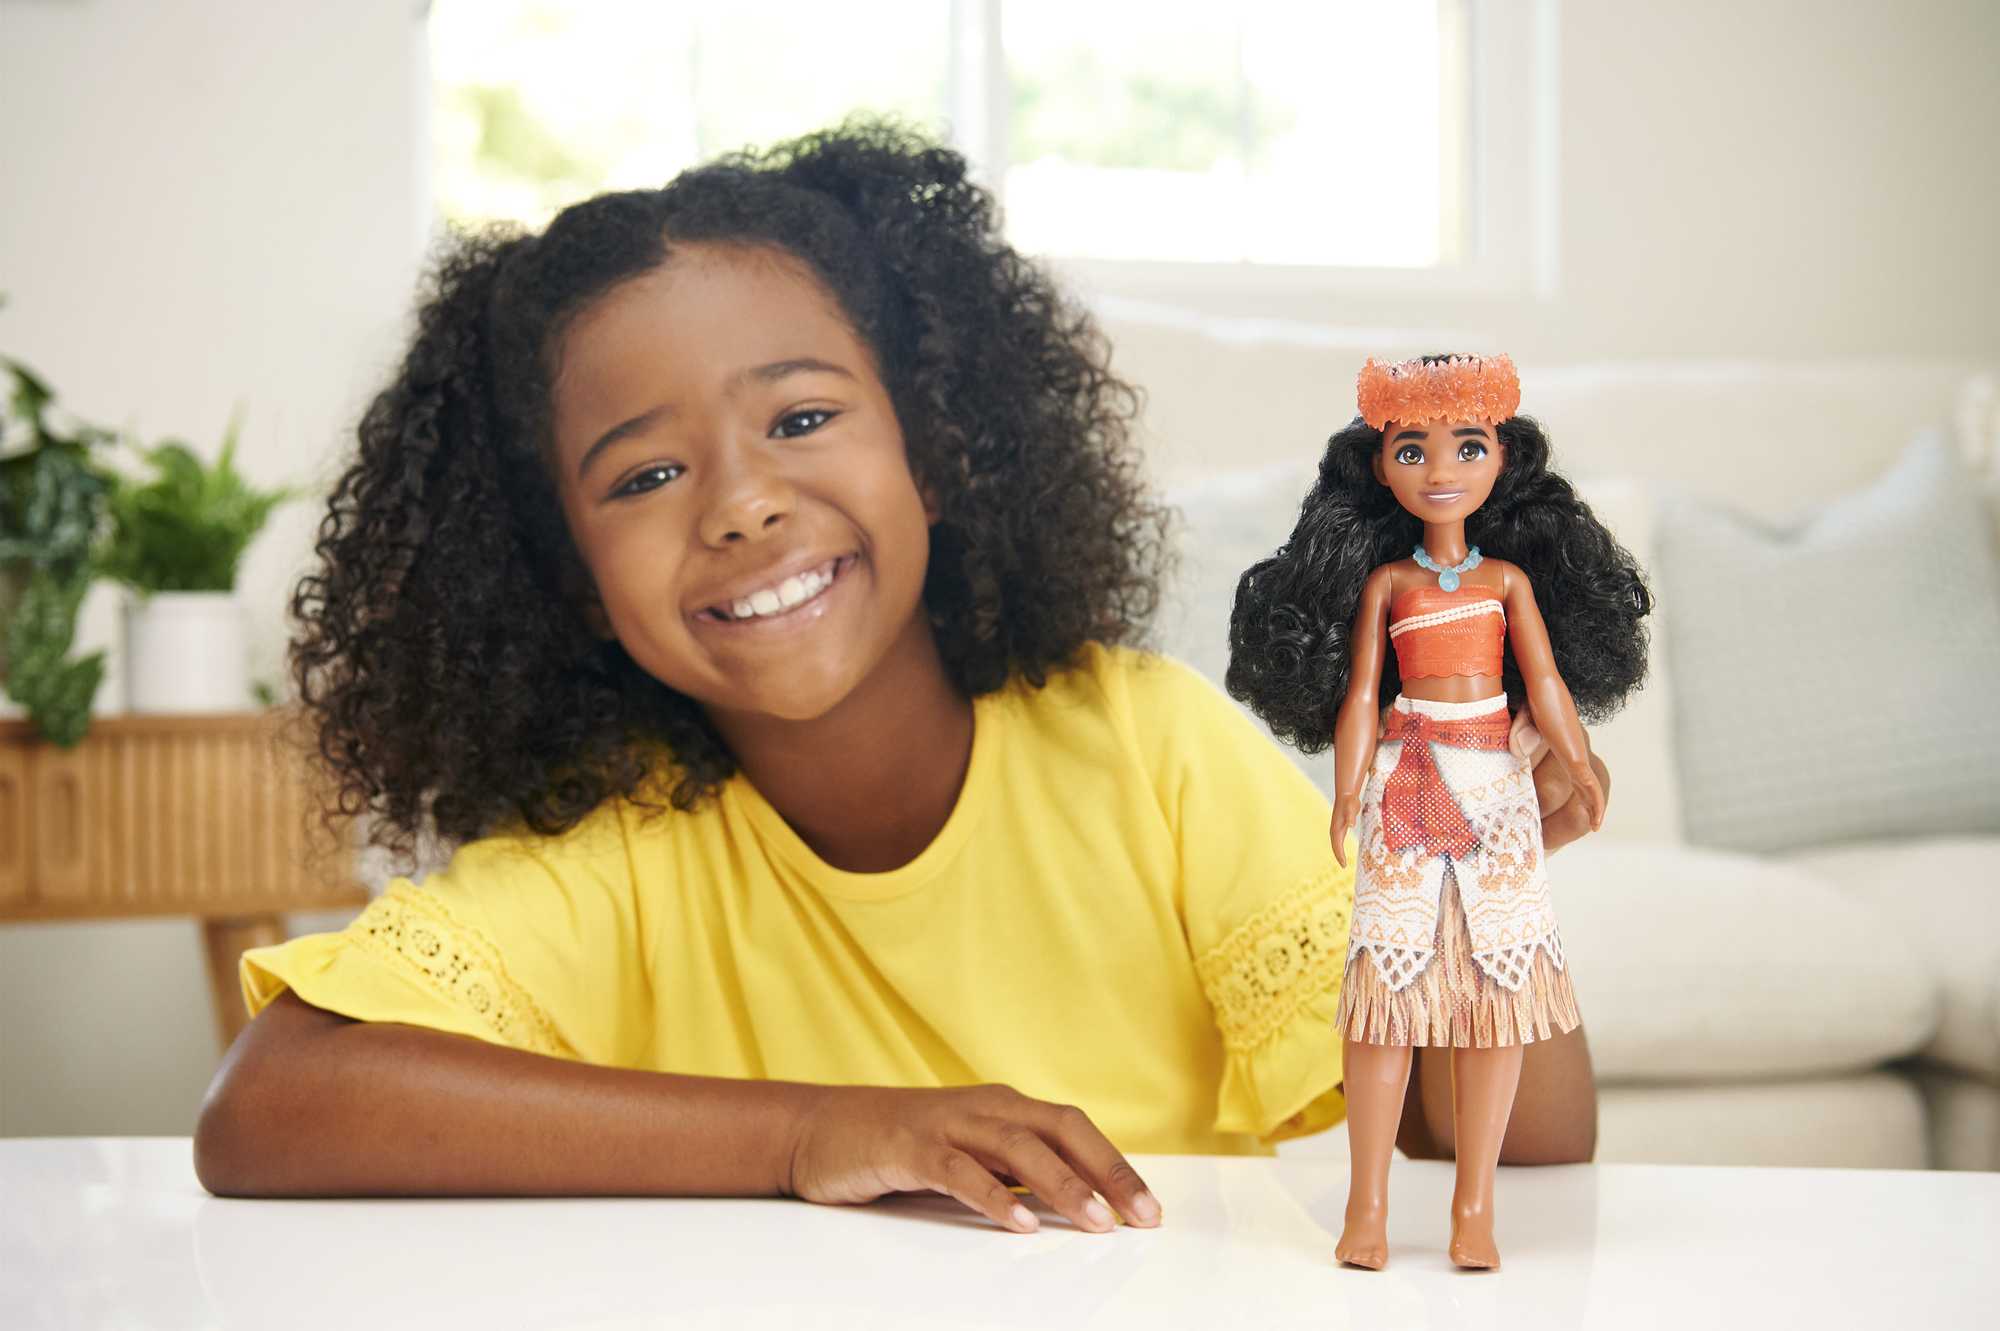 Disney Princess Toys, Moana Fashion Doll and Accessories | Mattel